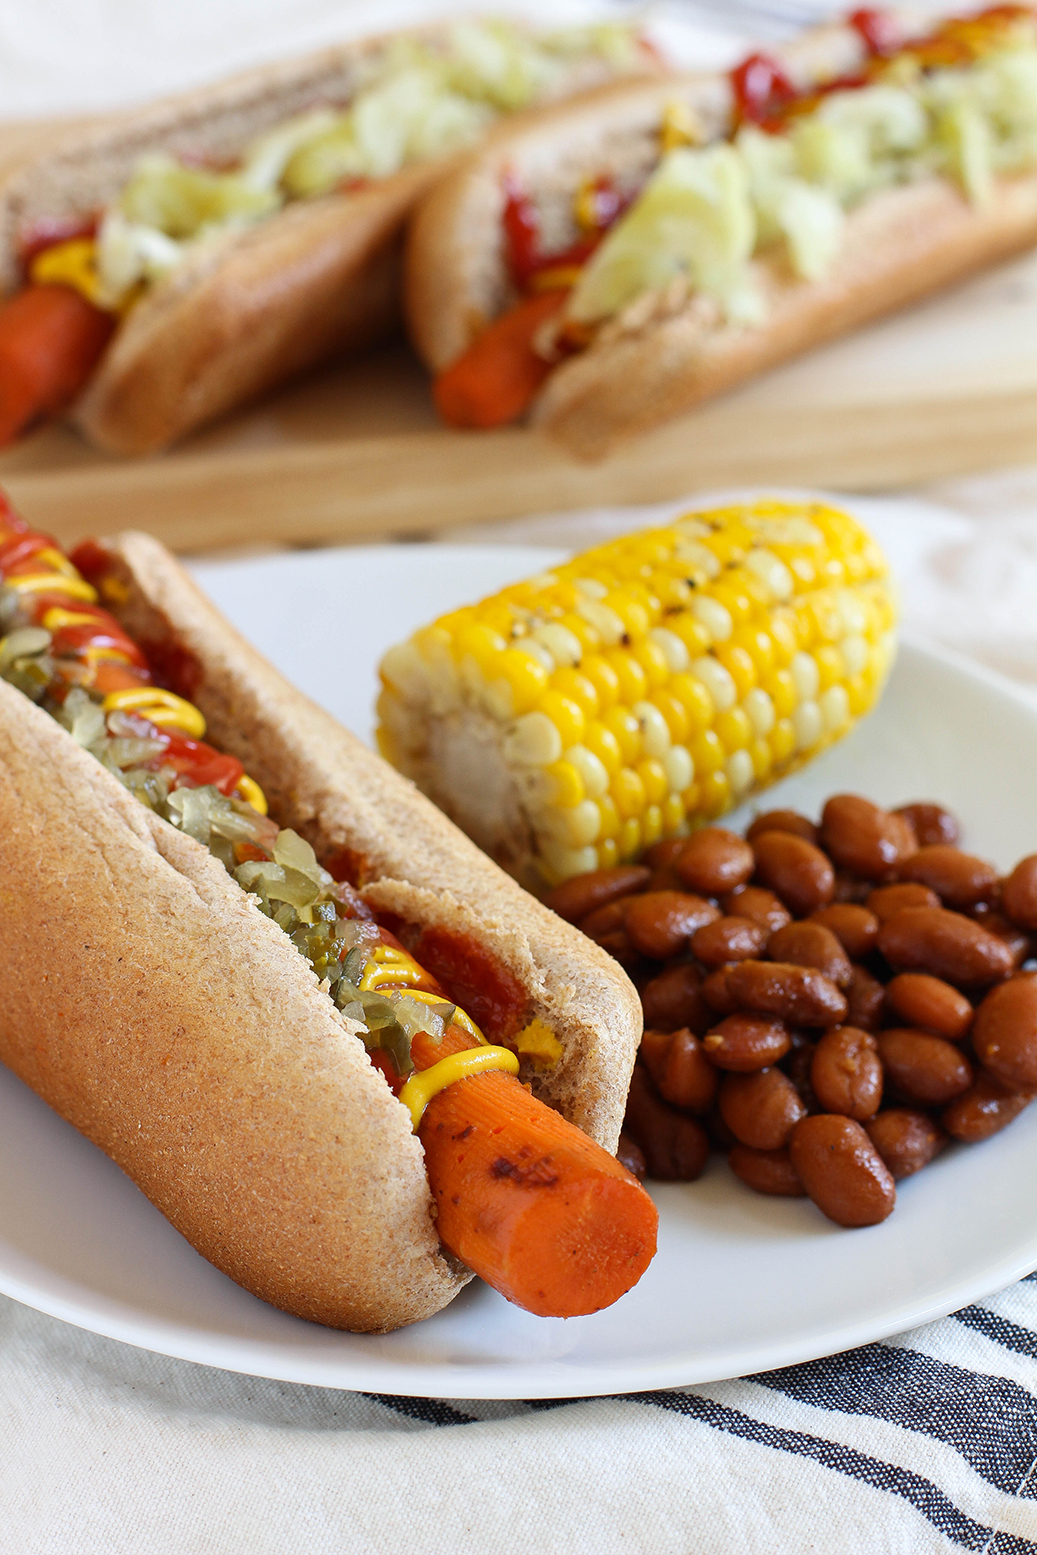 Vegan Carrot Hot Dogs | The Mostly Vegan